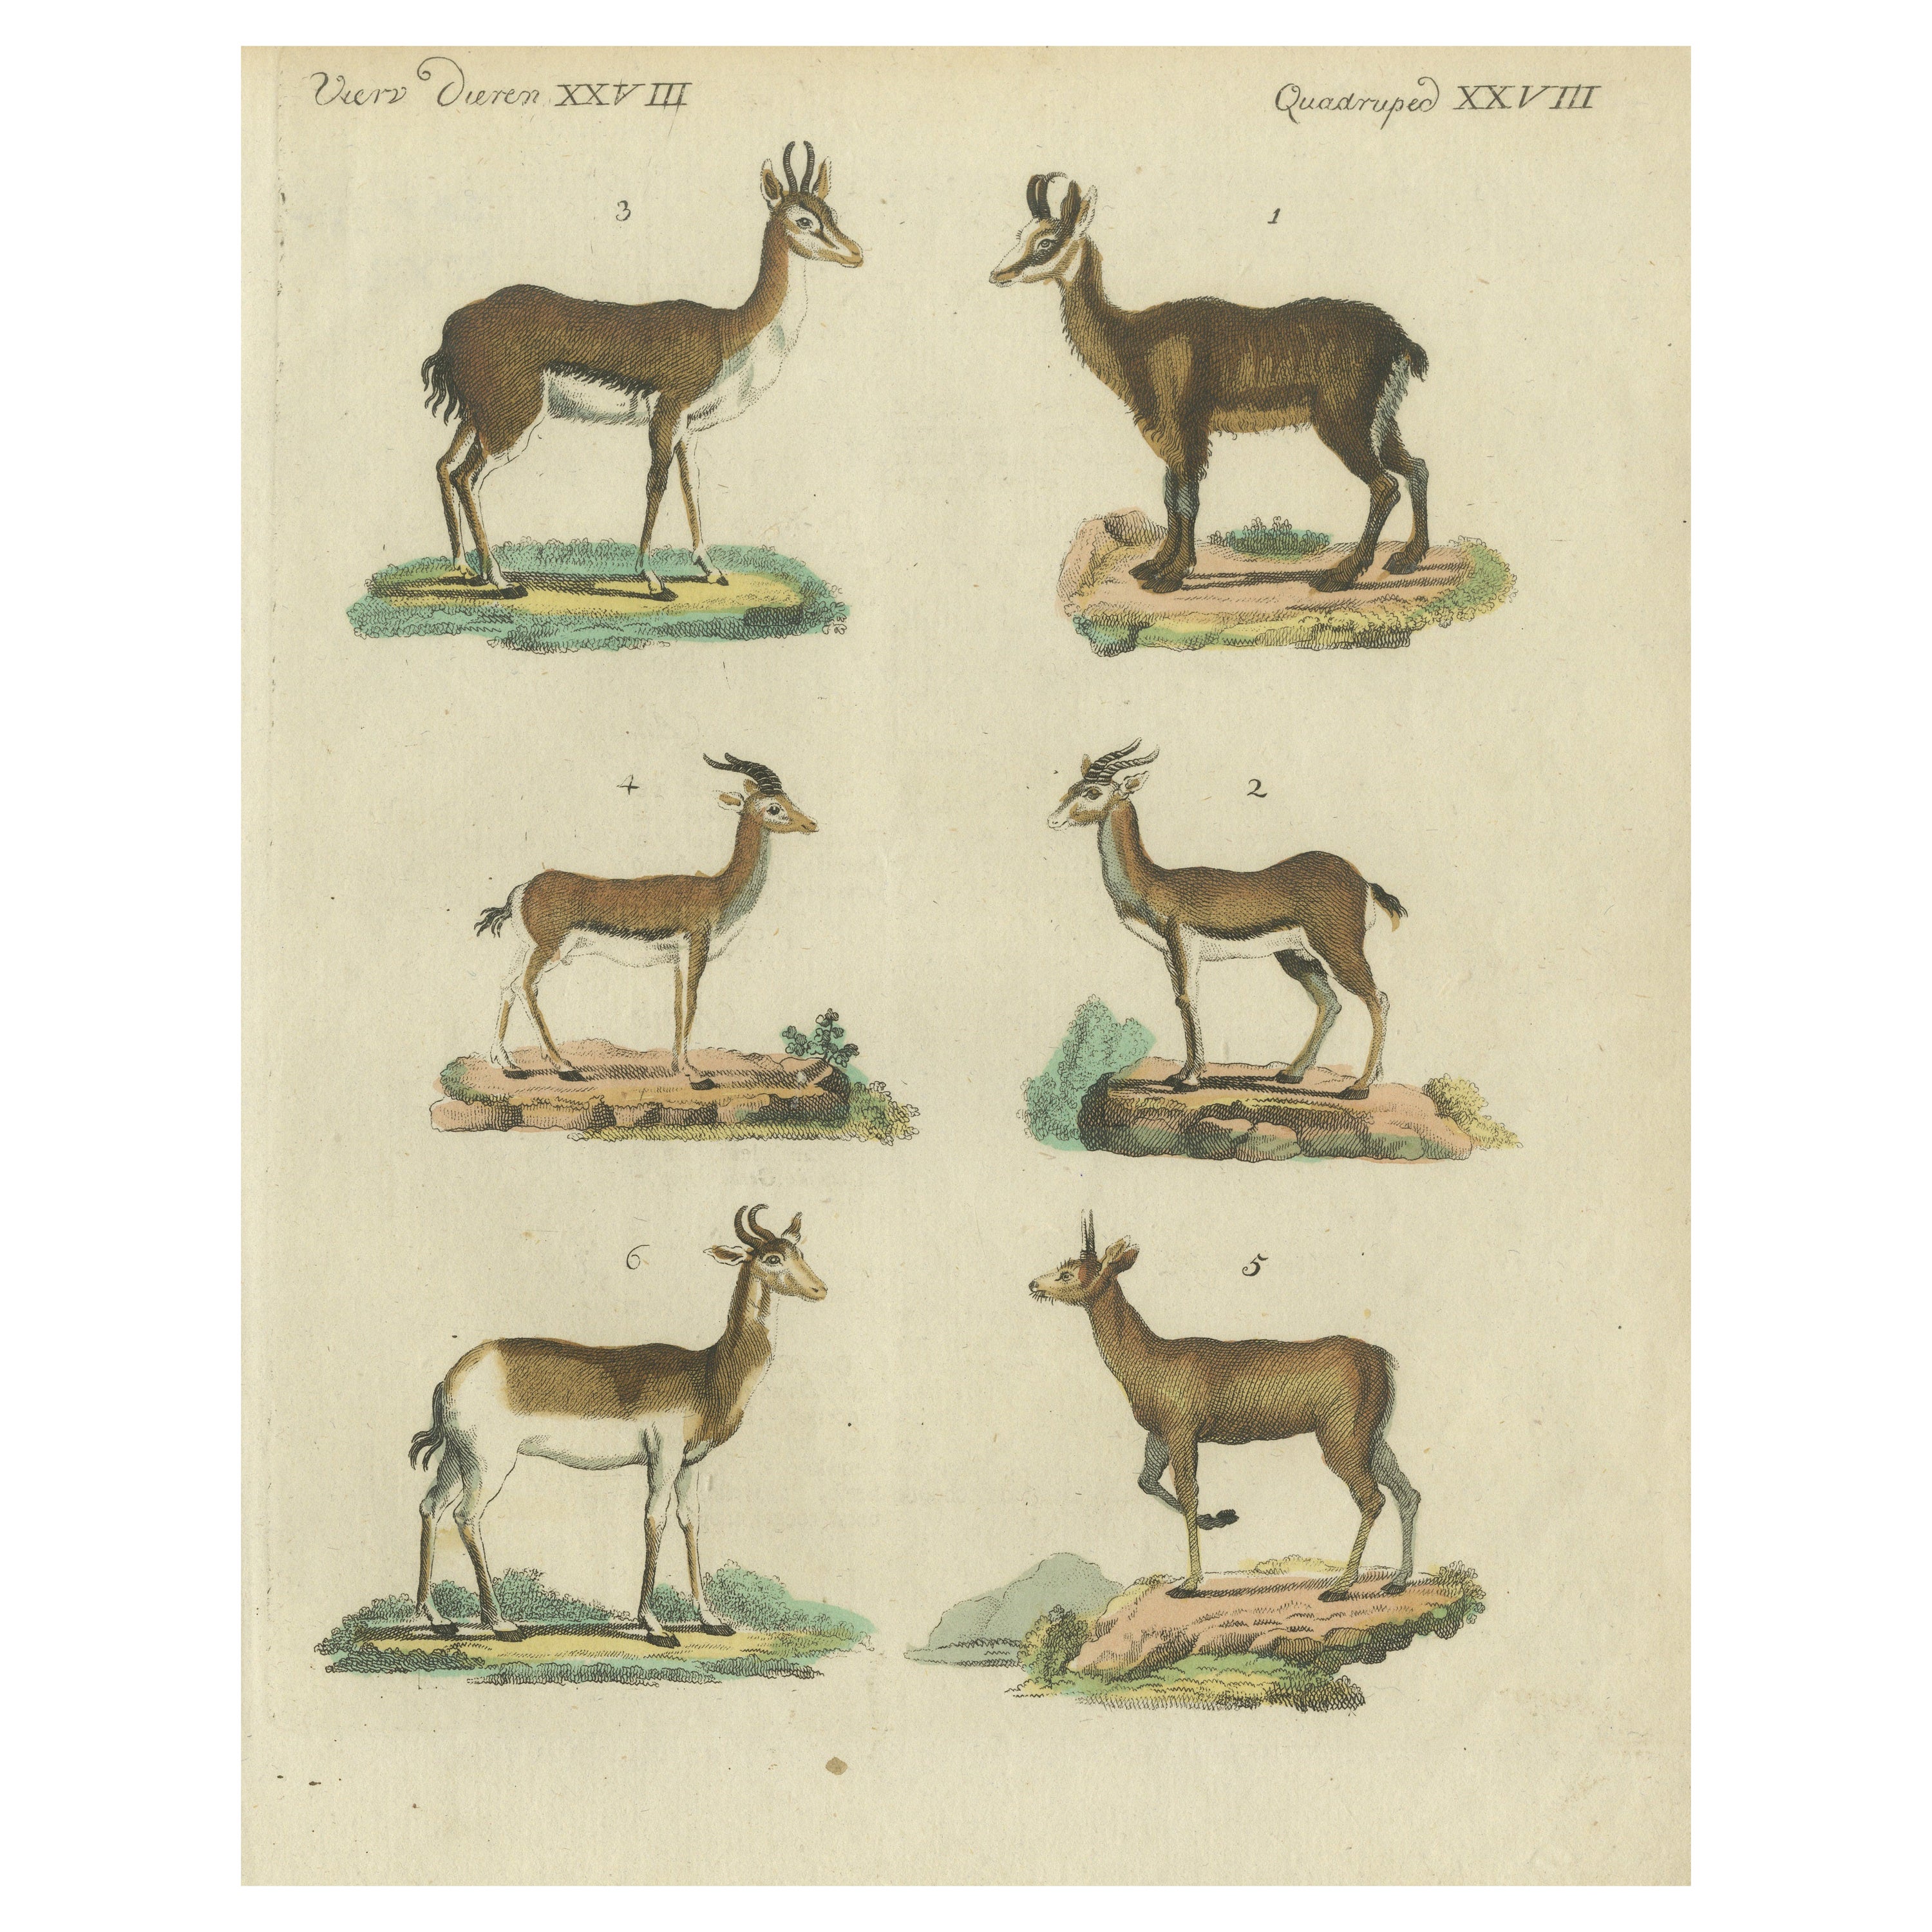 Original Hand-Colored Antique Print of various Antelope Species, circa 1820